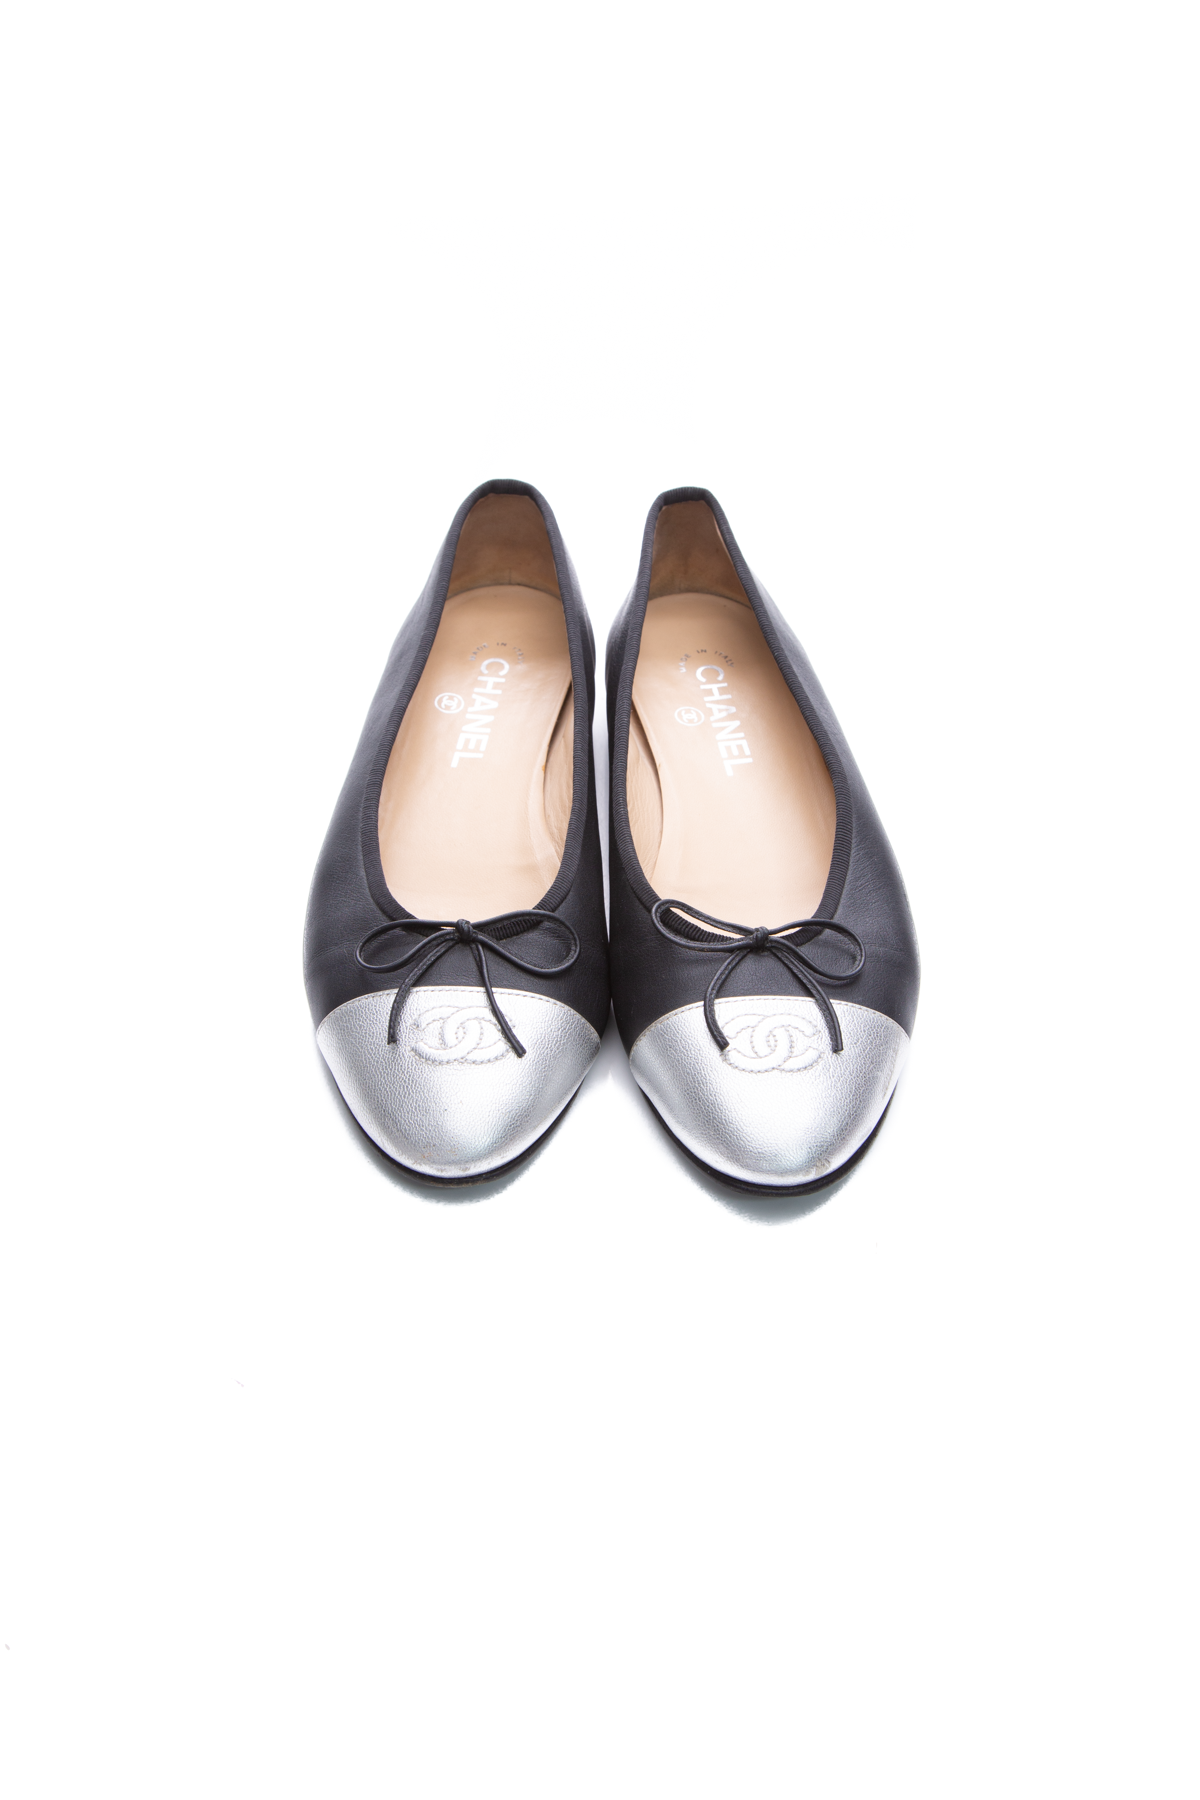 Chanel CC Ballet Flats- Size 40.5